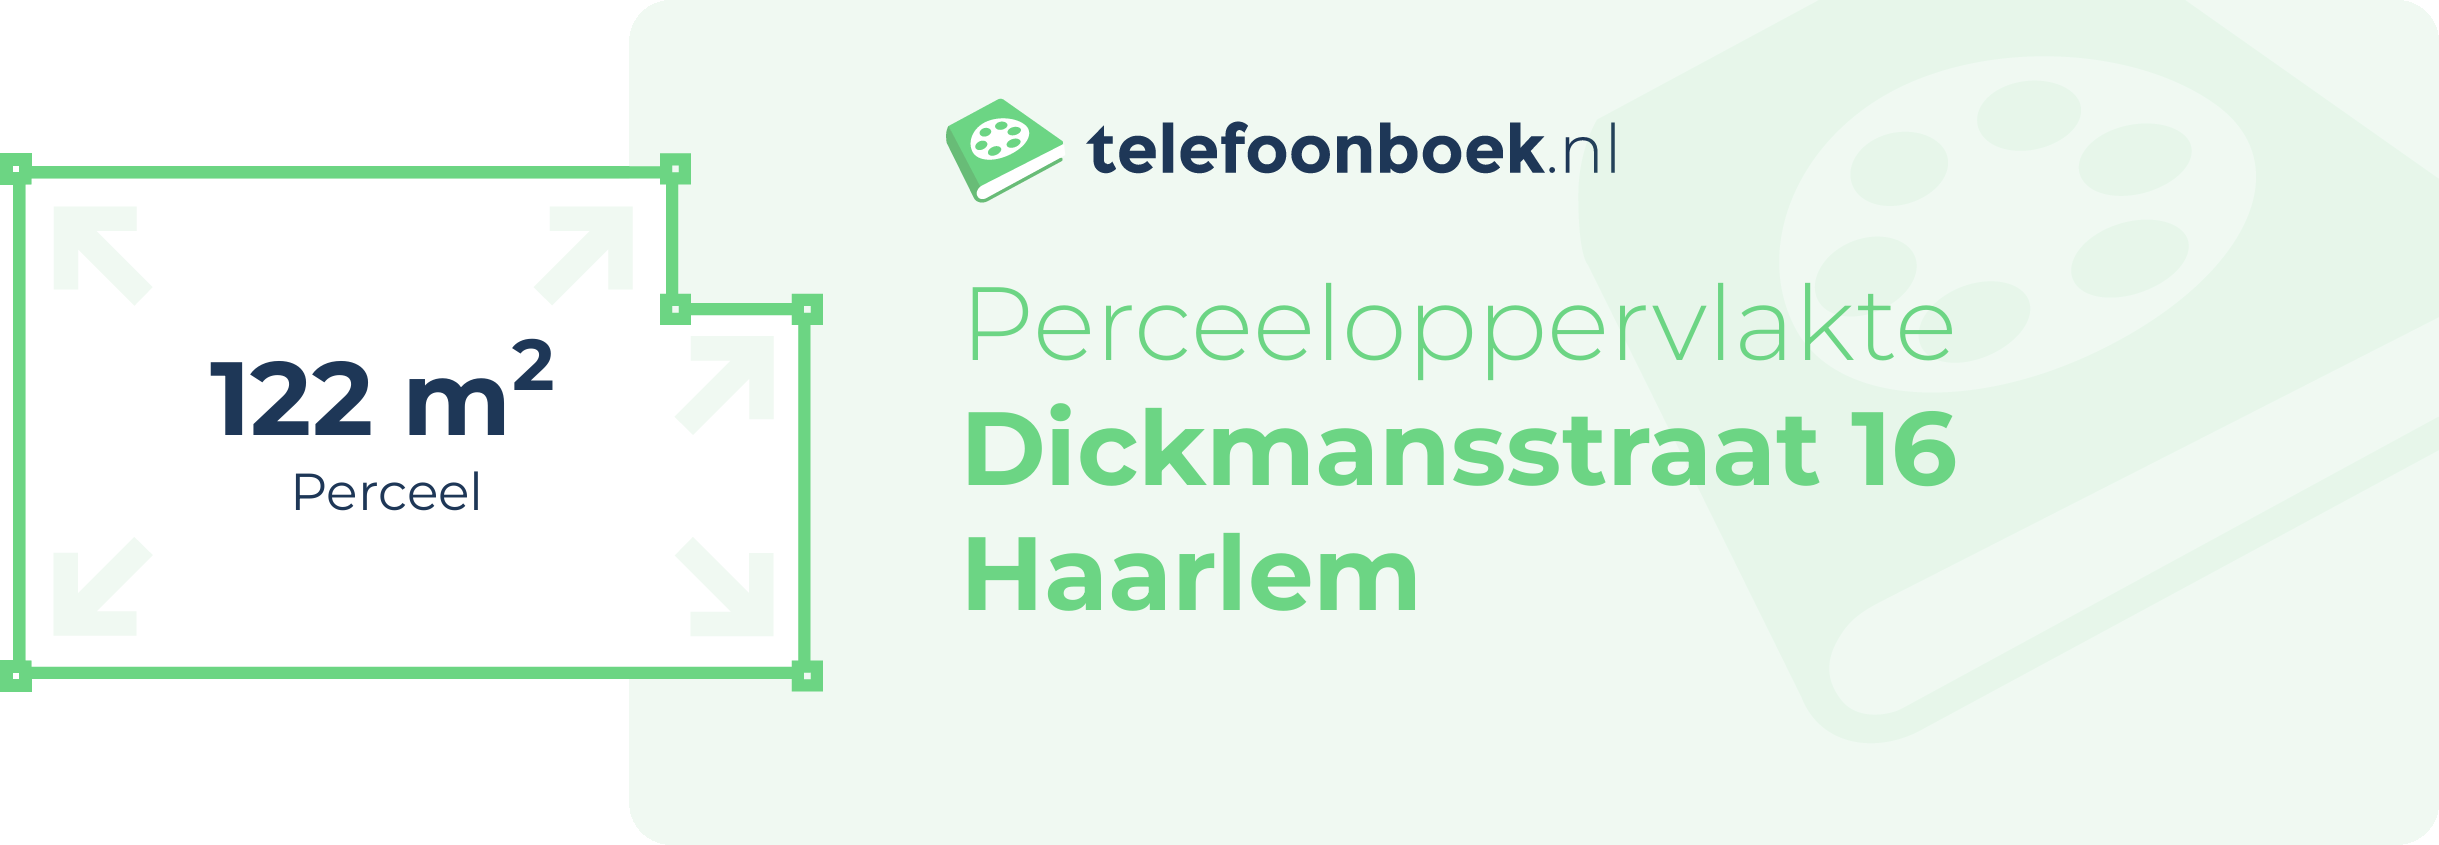 Perceeloppervlakte Dickmansstraat 16 Haarlem